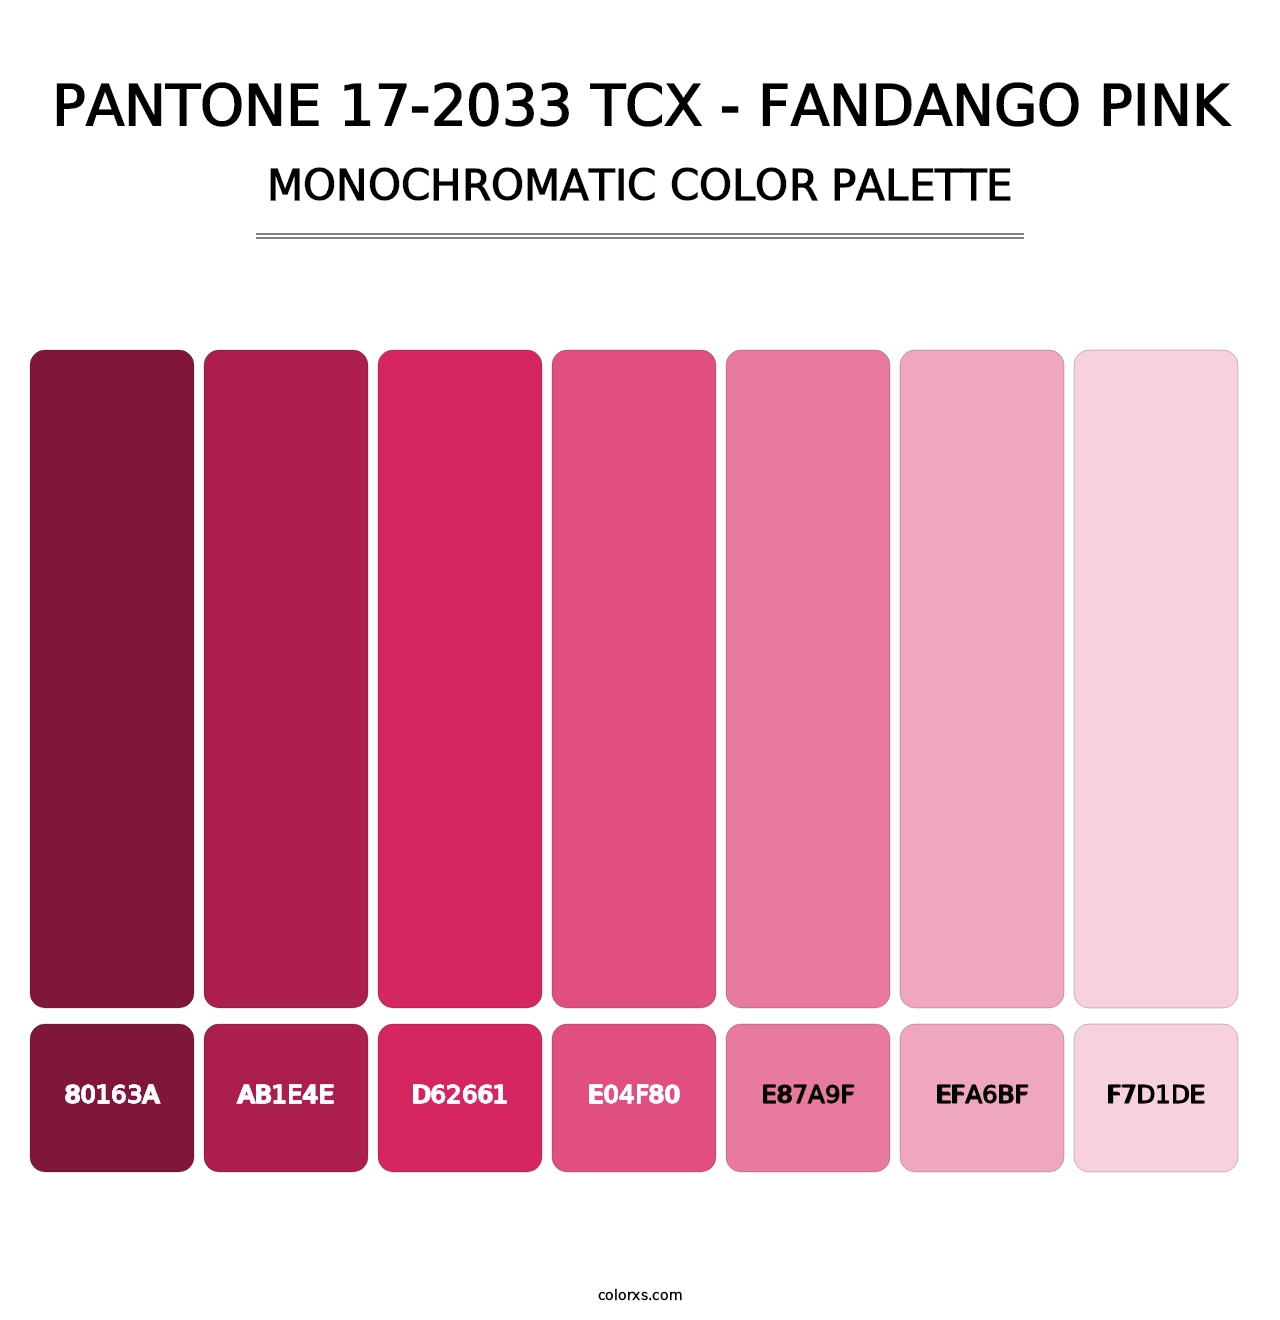 PANTONE 17-2033 TCX - Fandango Pink - Monochromatic Color Palette